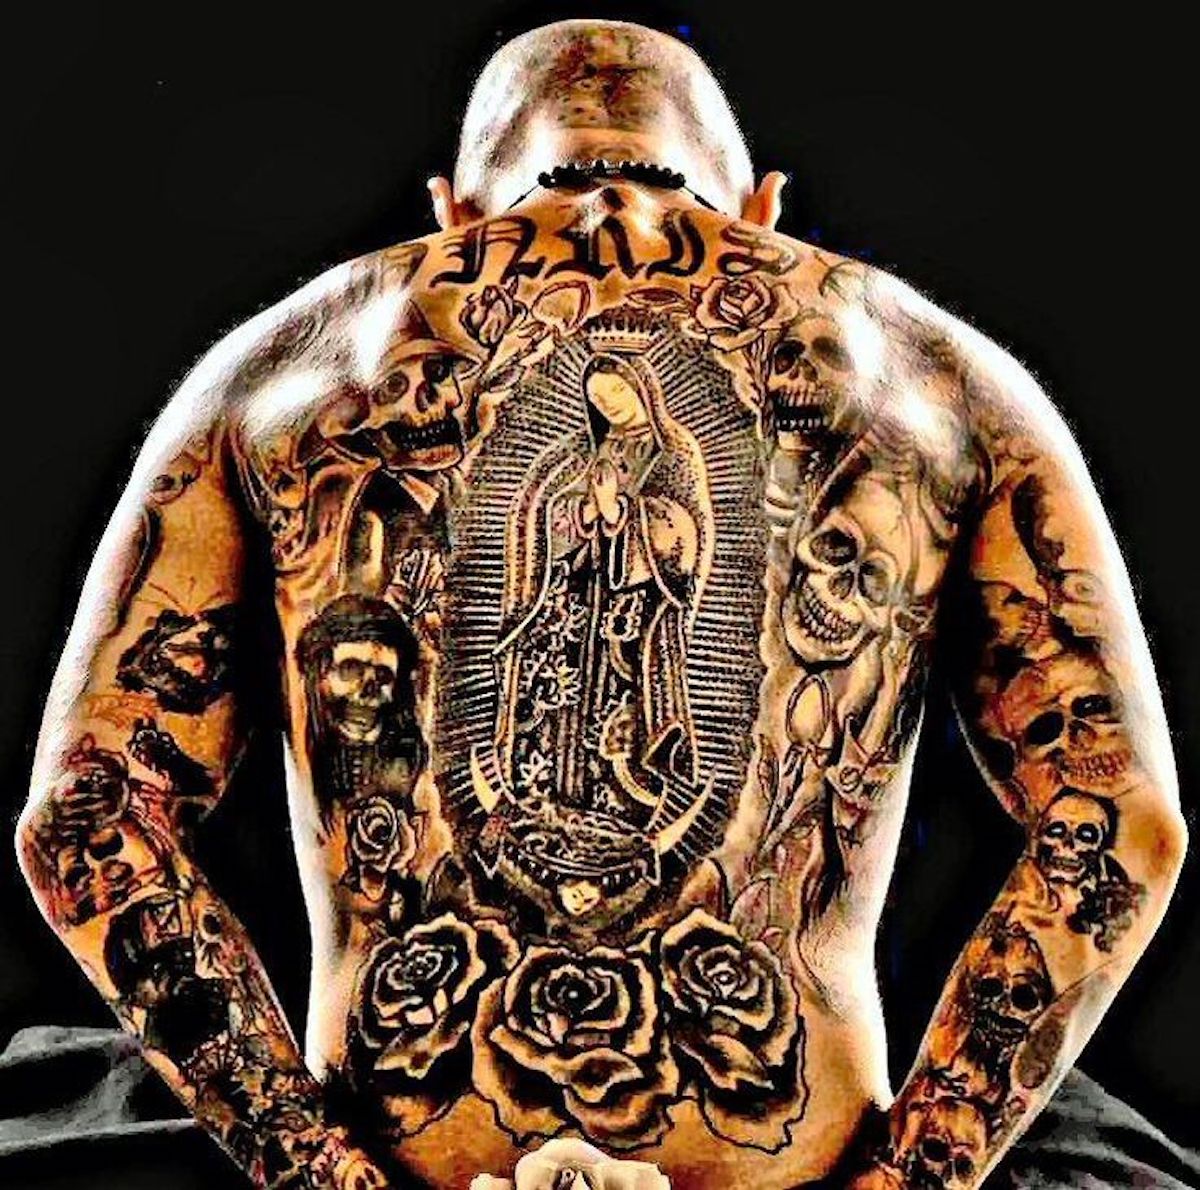 Mexican cholo tattoos